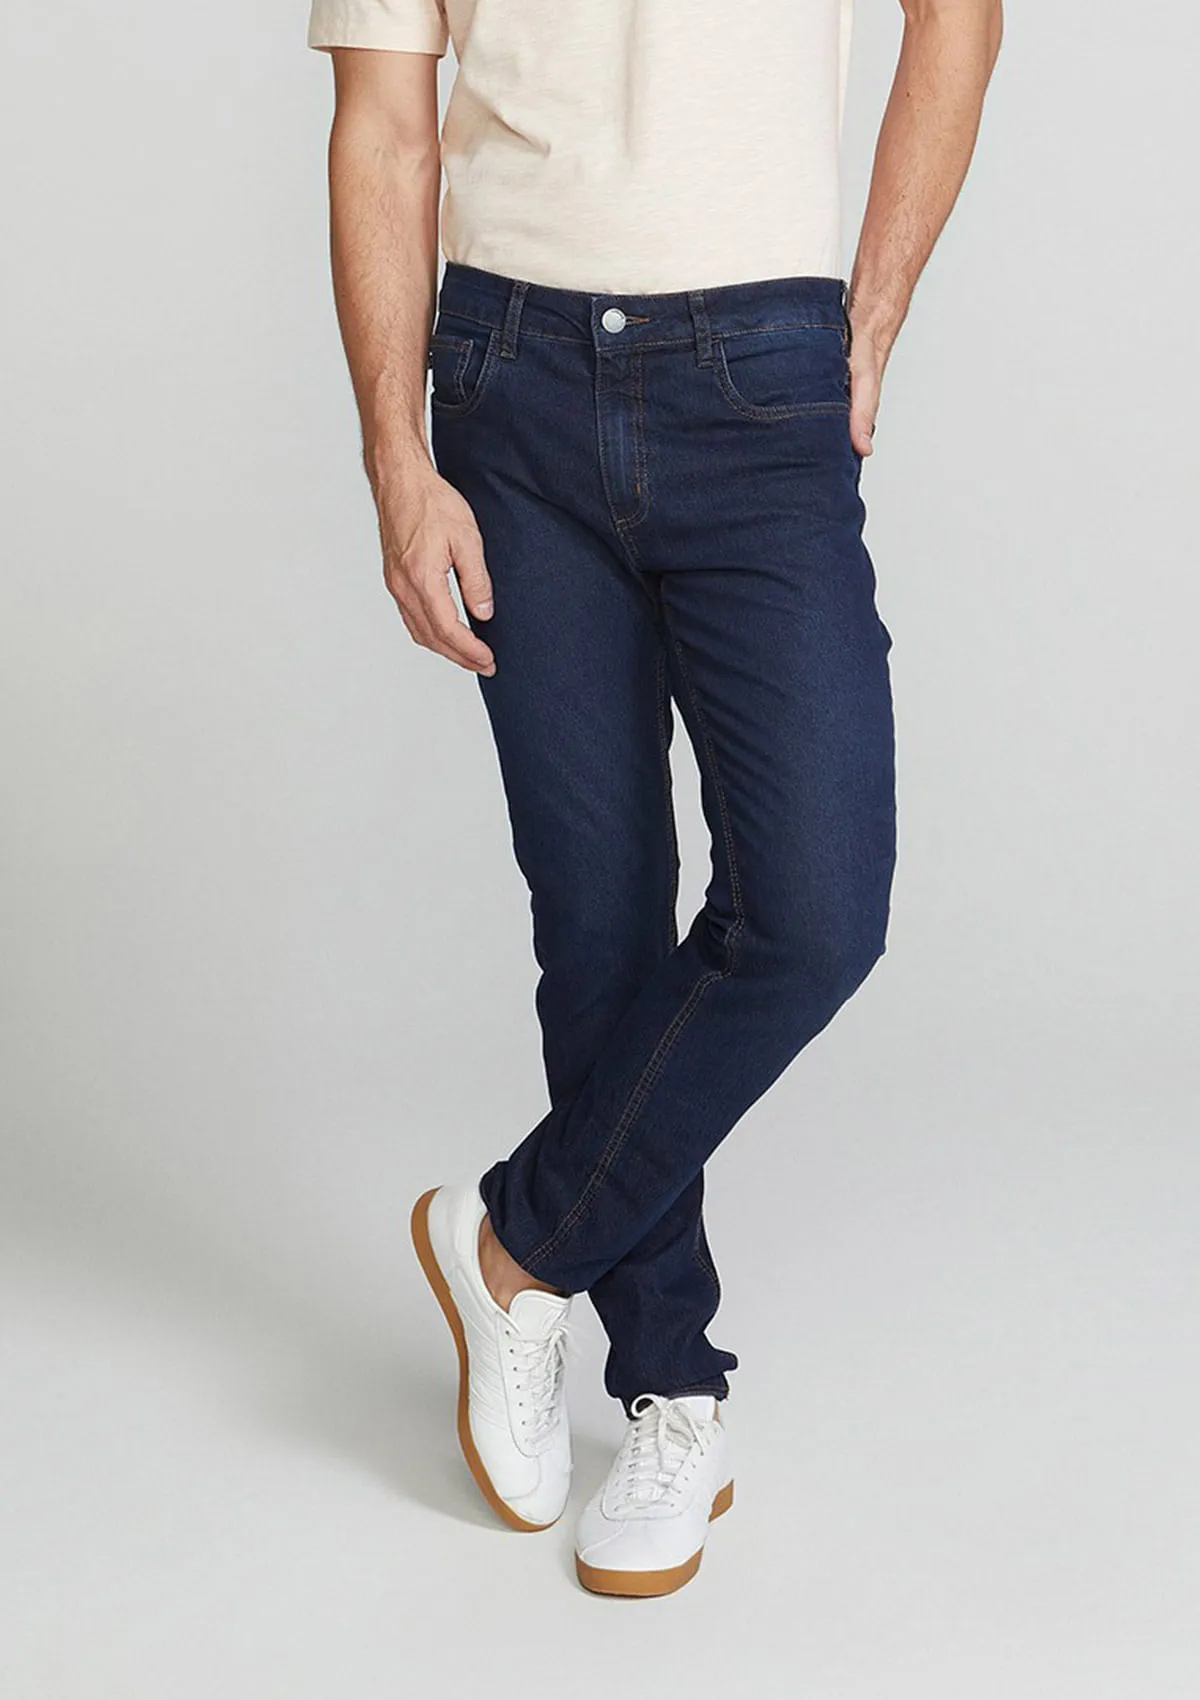 Cala Jeans Masculina Com Elastano Skinny - Azul Hering (Tamanho 36)